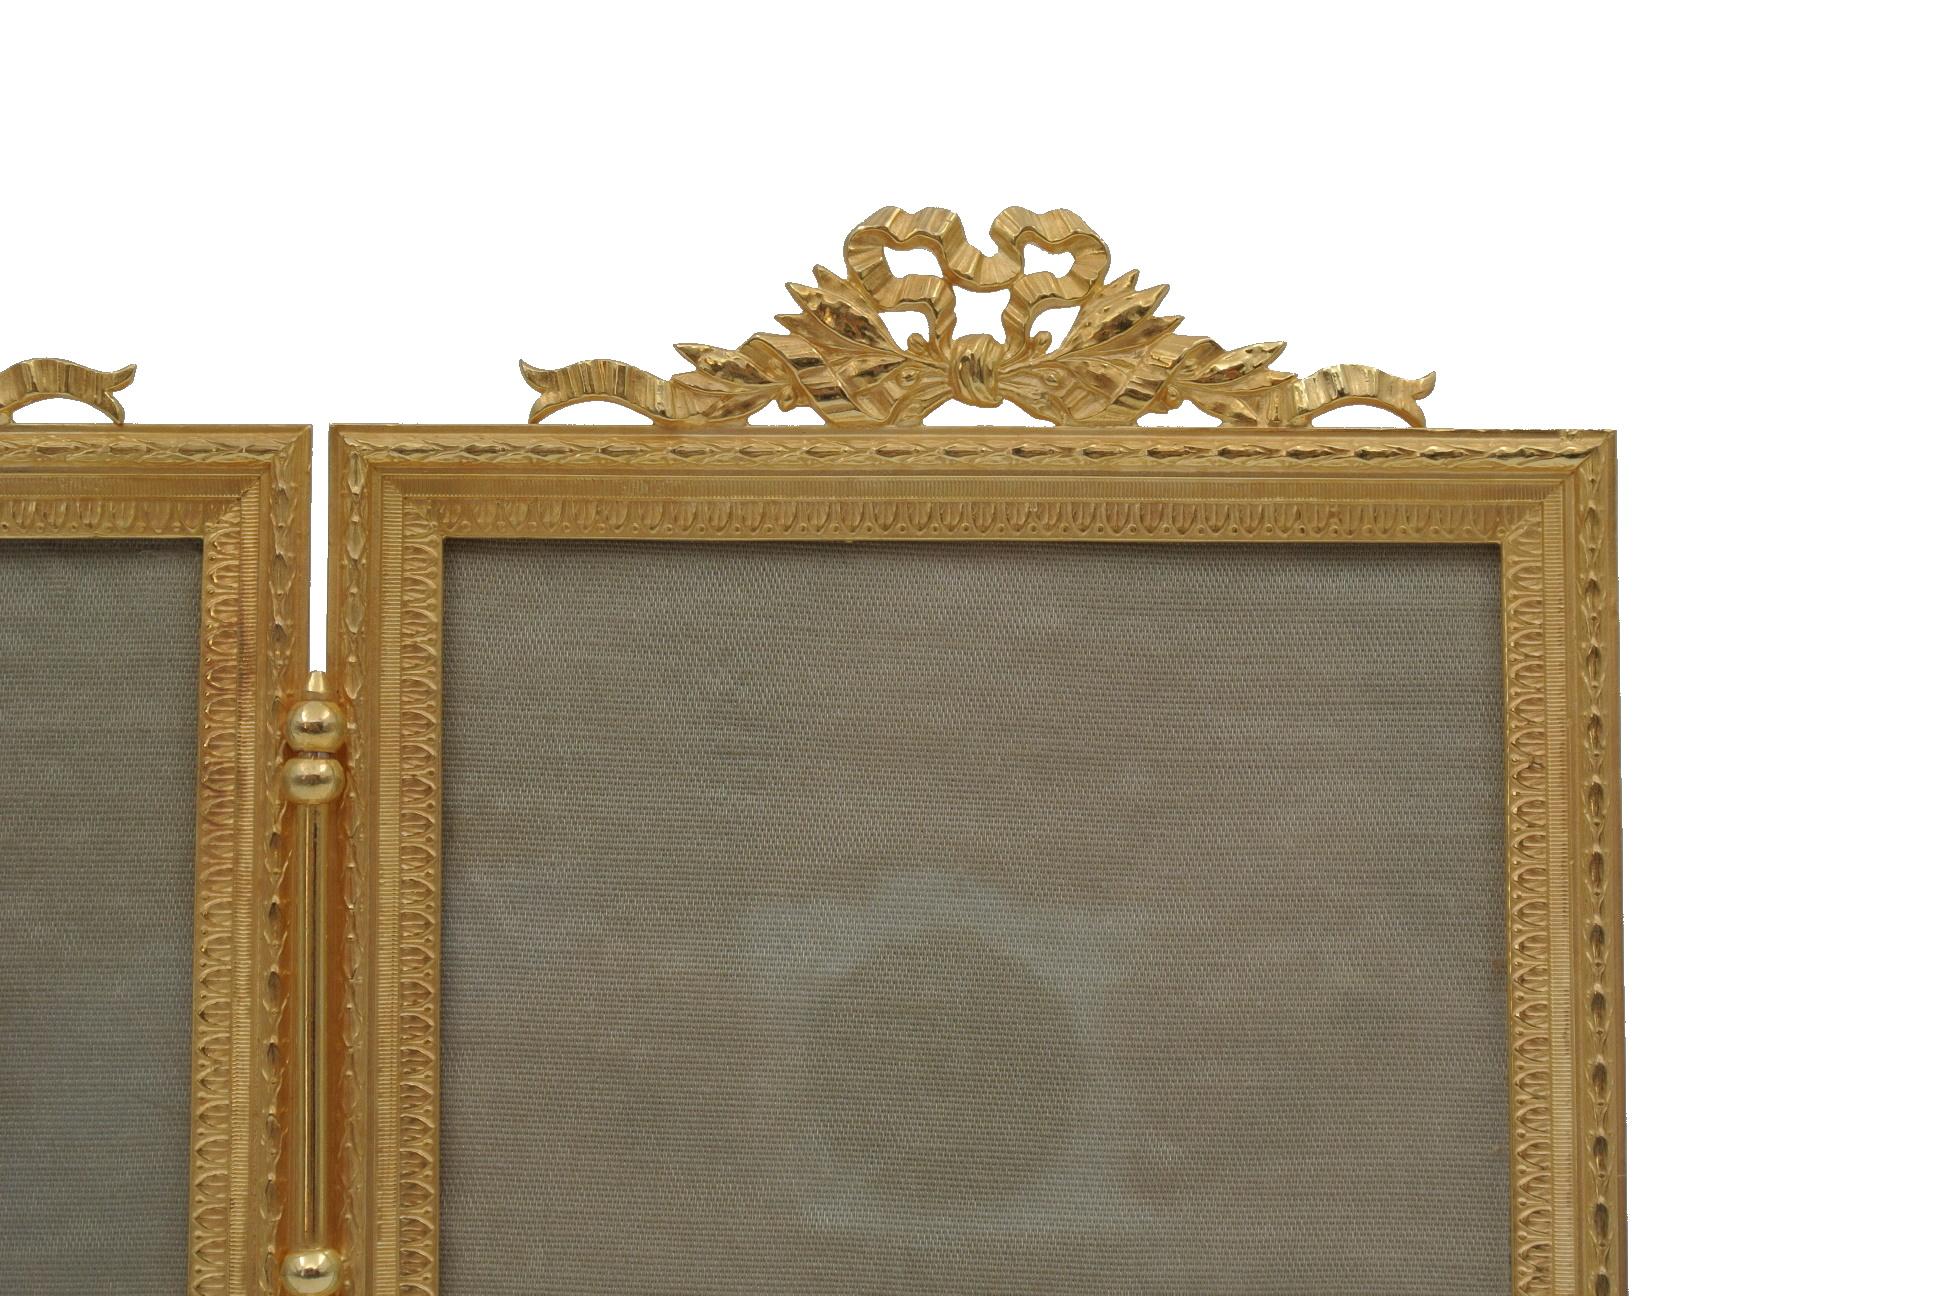 Double golden brass frame, 19th century, Napoleon III period.
Measures: Both H 18.5 cm, W 24.5 cm, D 1.5 cm
One H 18.5 cm, W 12 cm, D 1.5 cm.